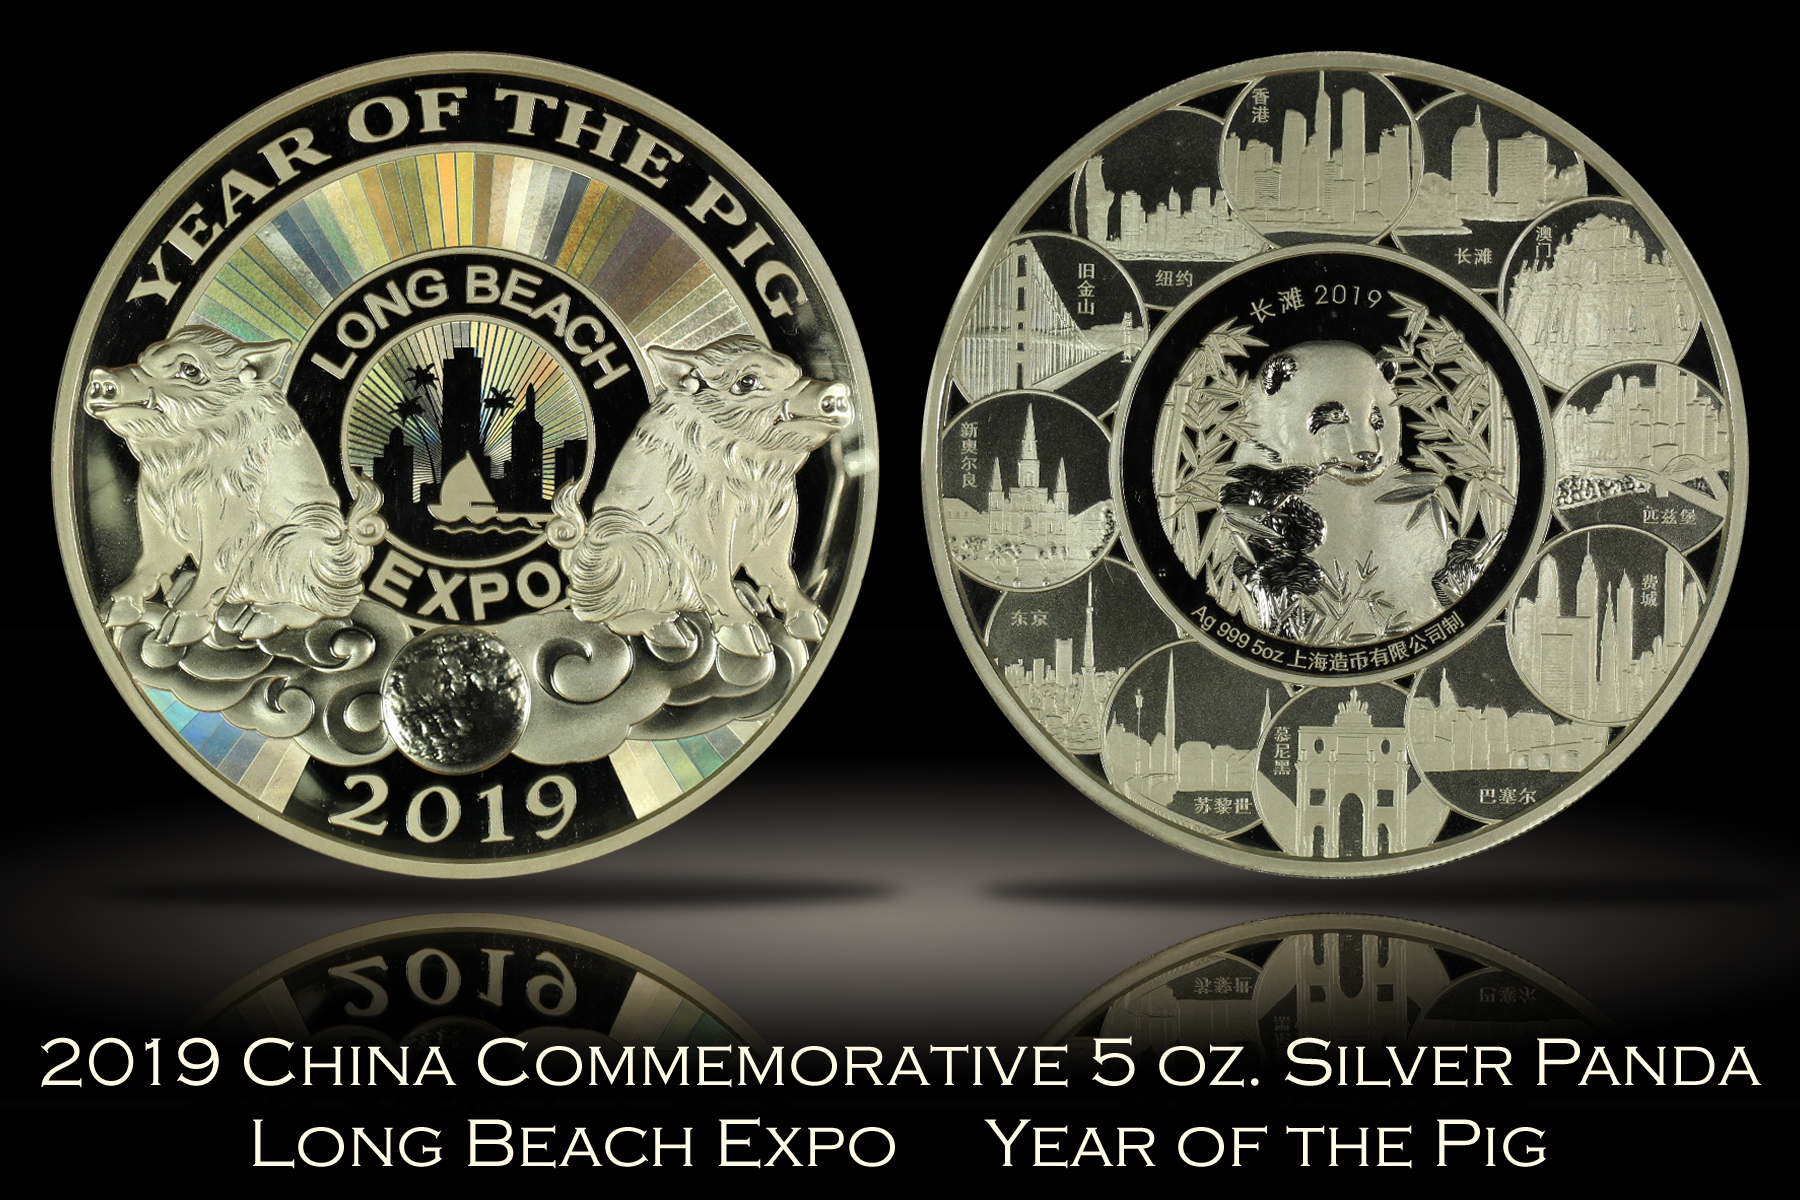 2019 China Commemorative Long Beach Expo 5 oz. Silver Panda Year of the Pig